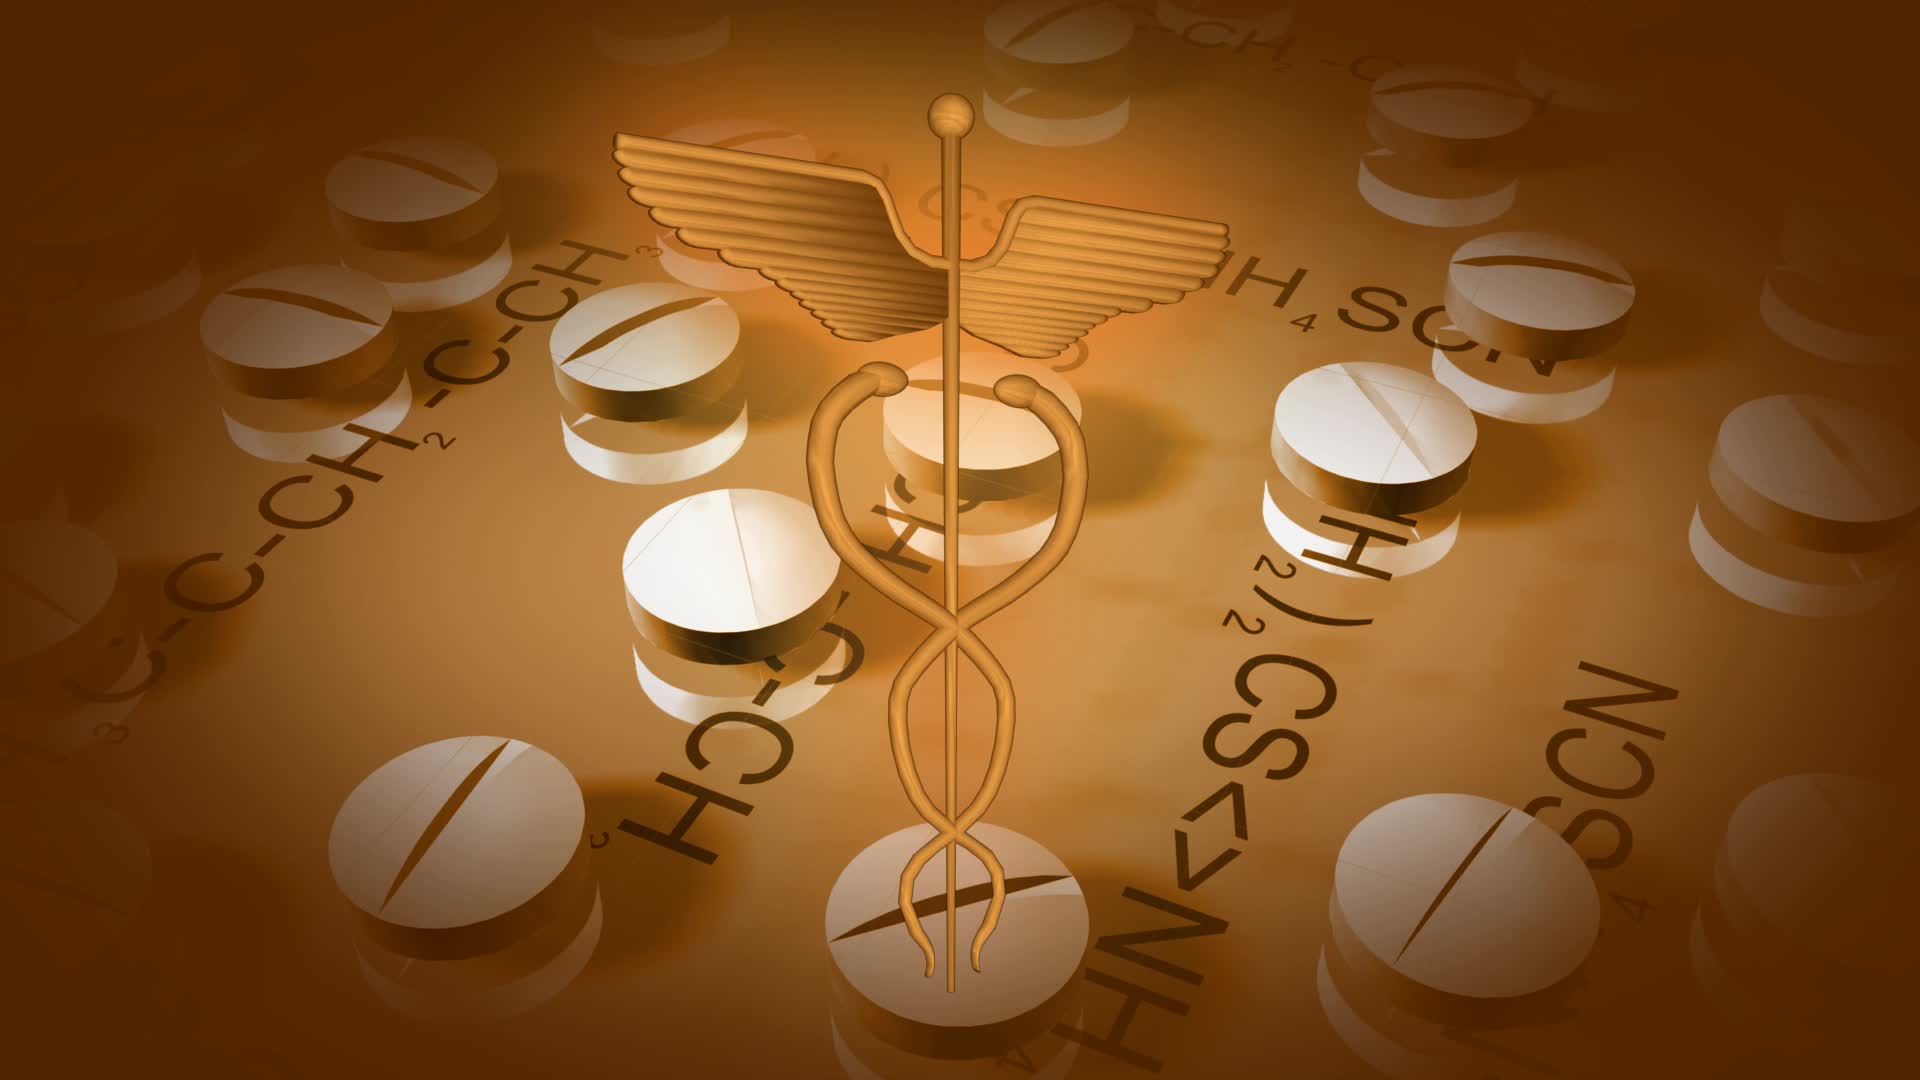 Twirling Medical Symbol & Pills